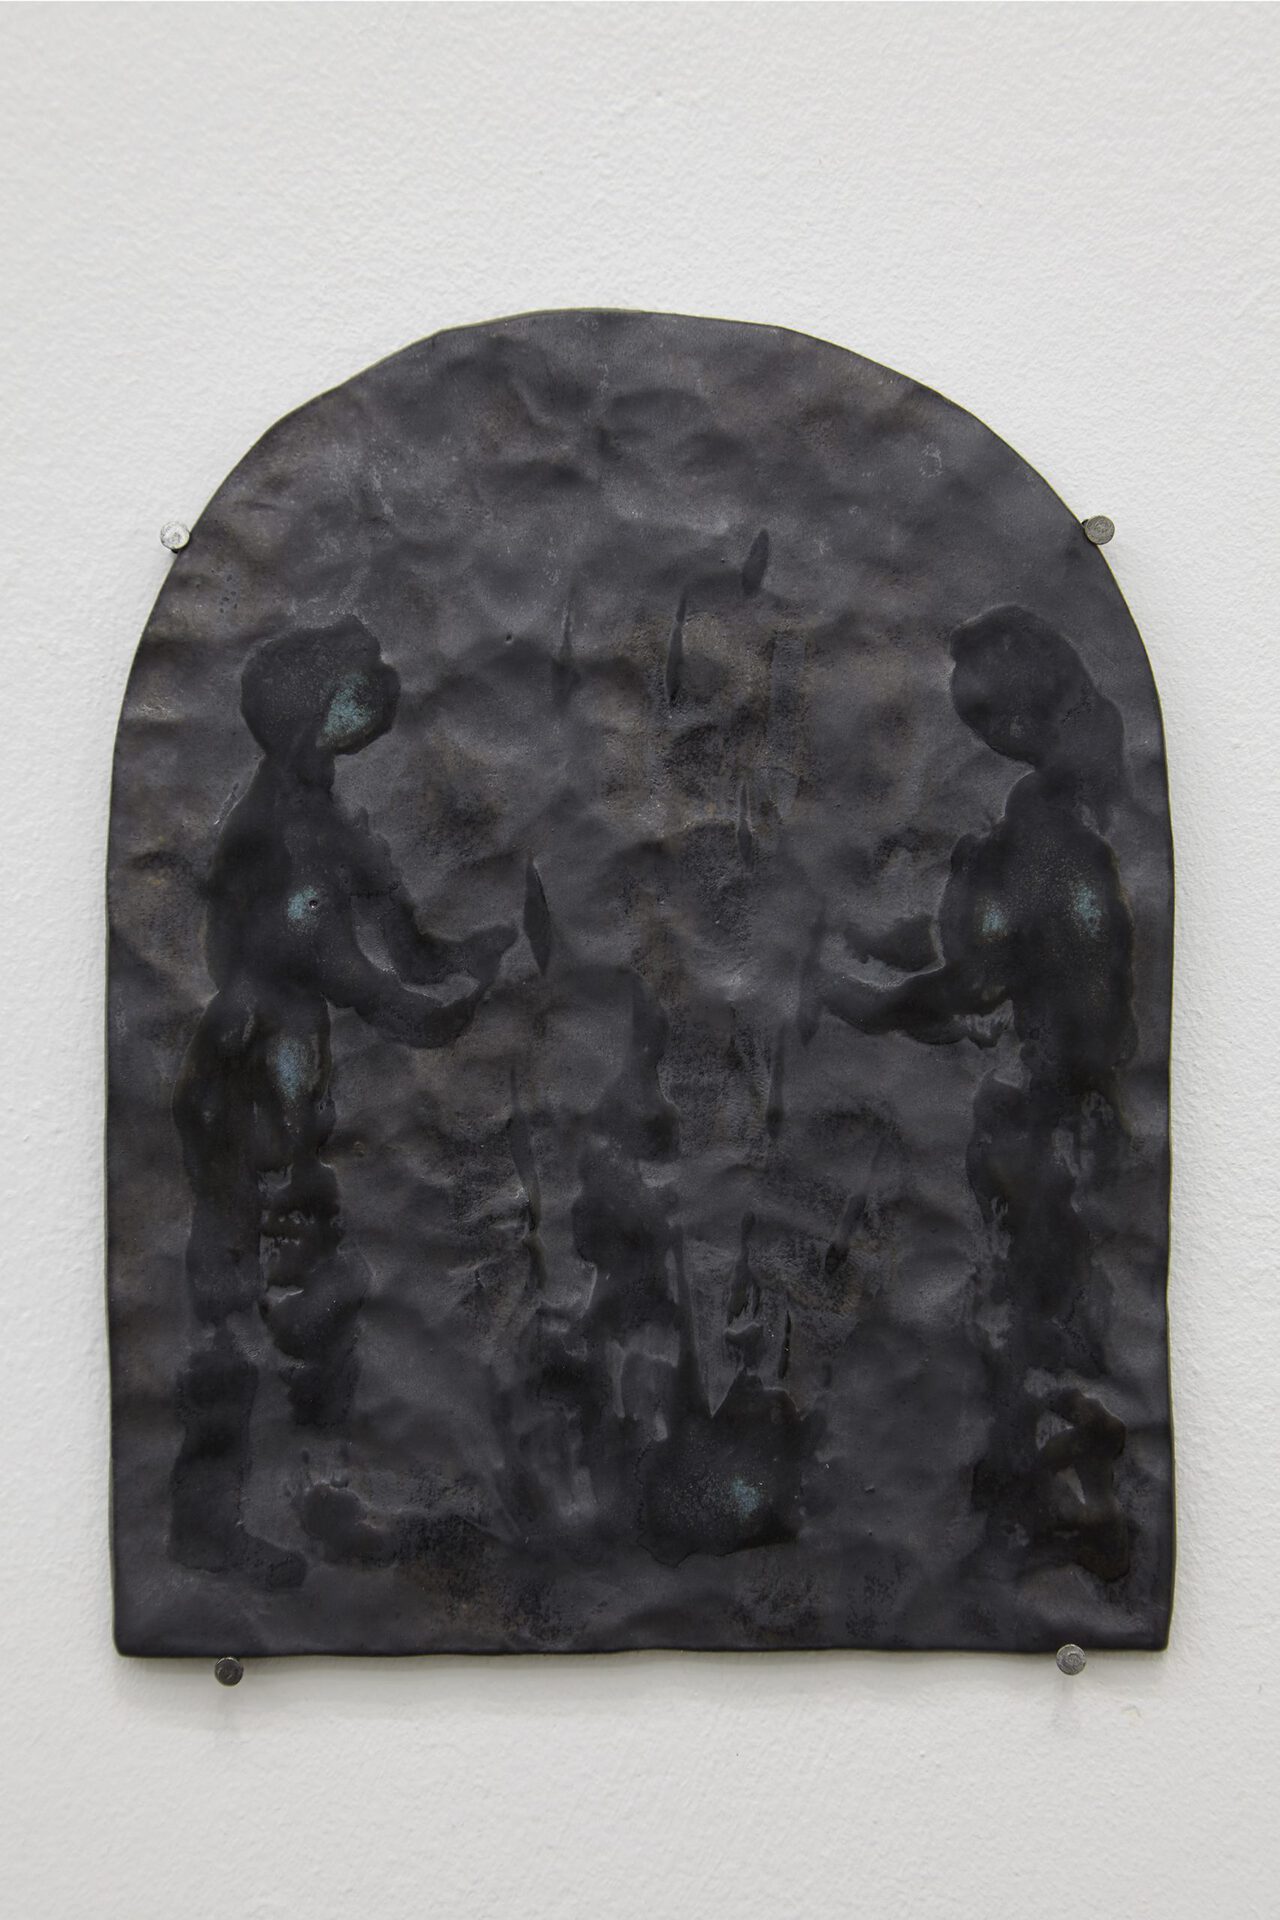 Sári Ember: Two figures with fire, 2020, ceramics, 17x13x0,5 cm, Photo: Sári Ember, courtesy of Ani Molnár Gallery